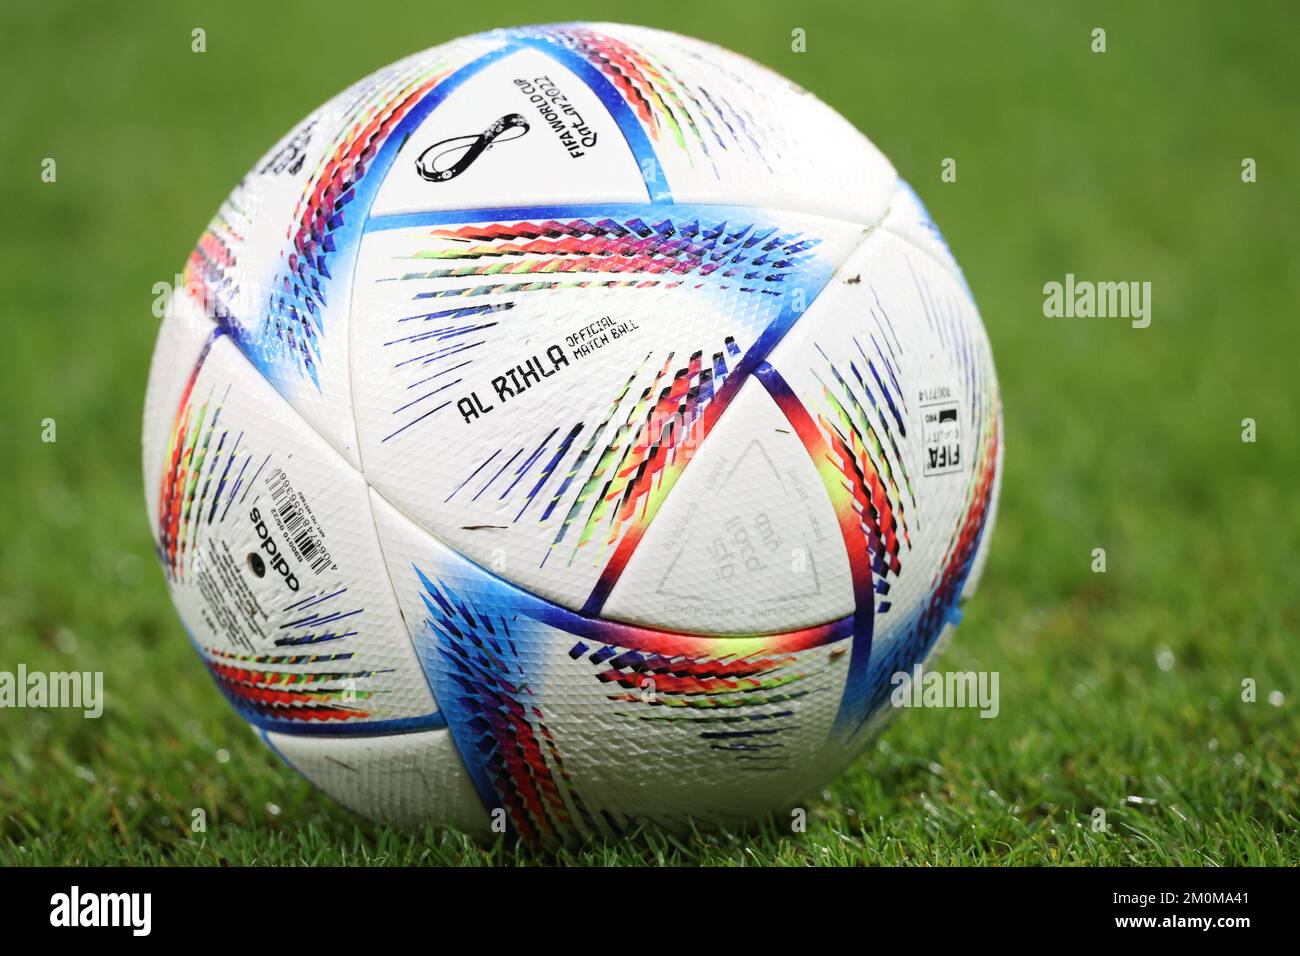 Doha, Qatar. 30th Nov, 2022. An official match ball "Al Rihla" for 2022  Qatar World Cup is seen on the pitch in Doha, Qatar, Nov. 30, 2022.  According to the FIFA statement,